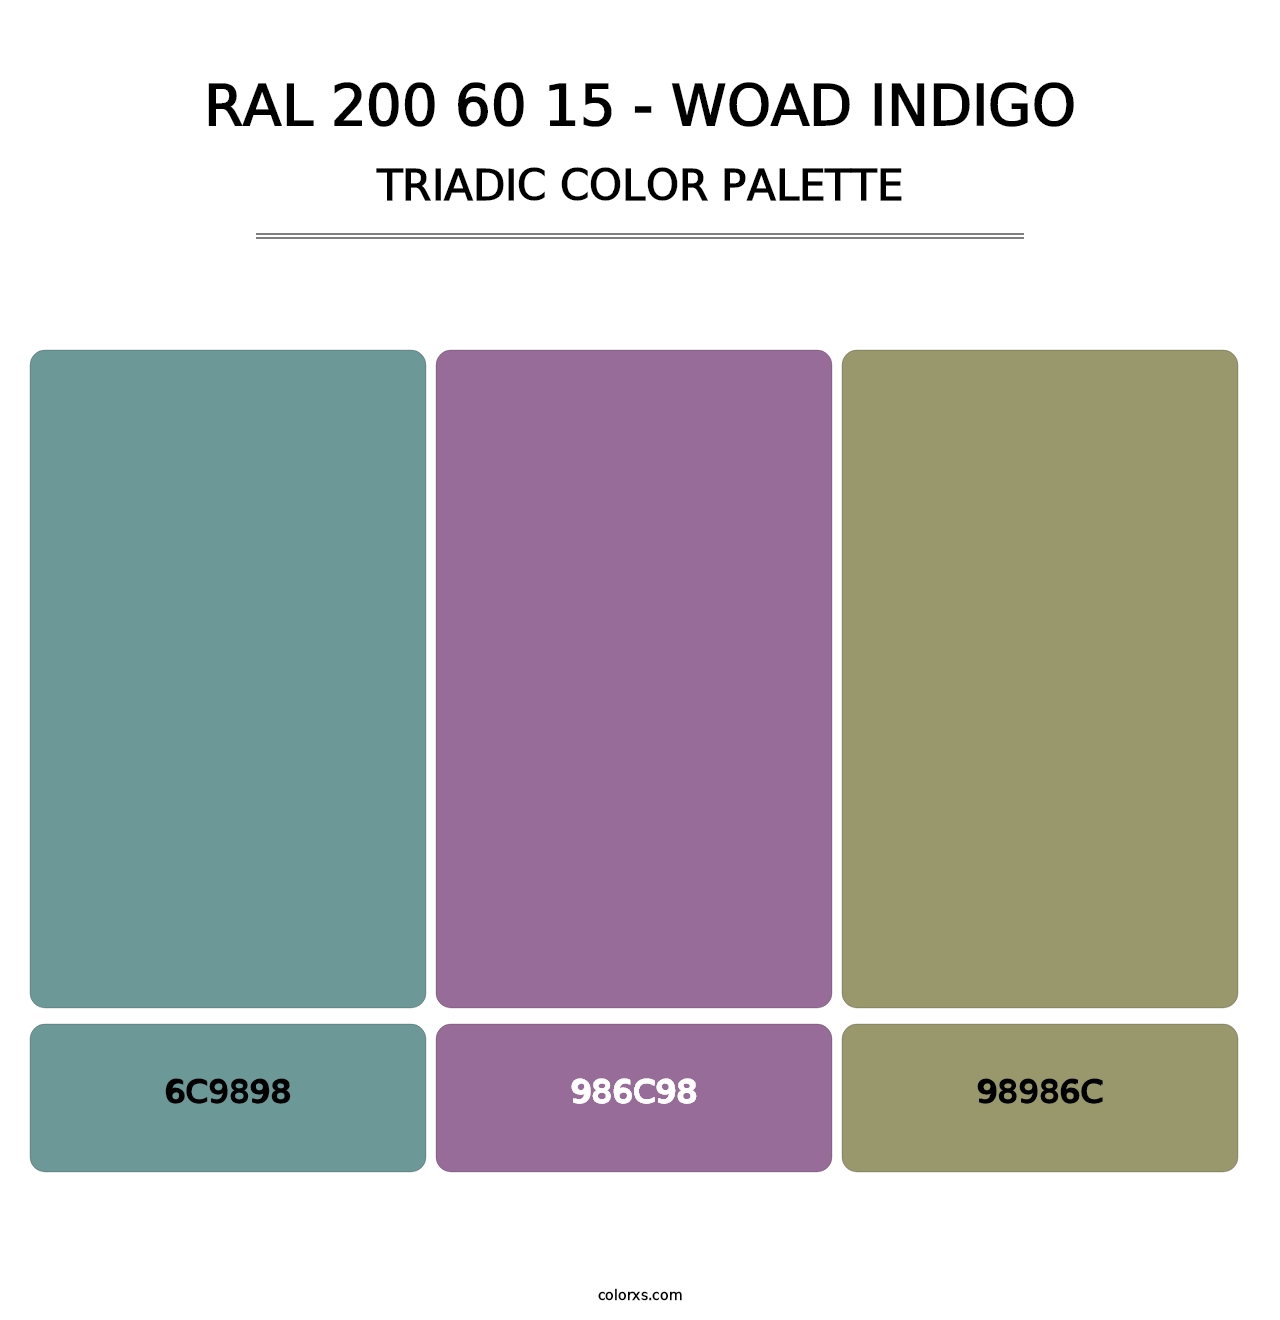 RAL 200 60 15 - Woad Indigo - Triadic Color Palette